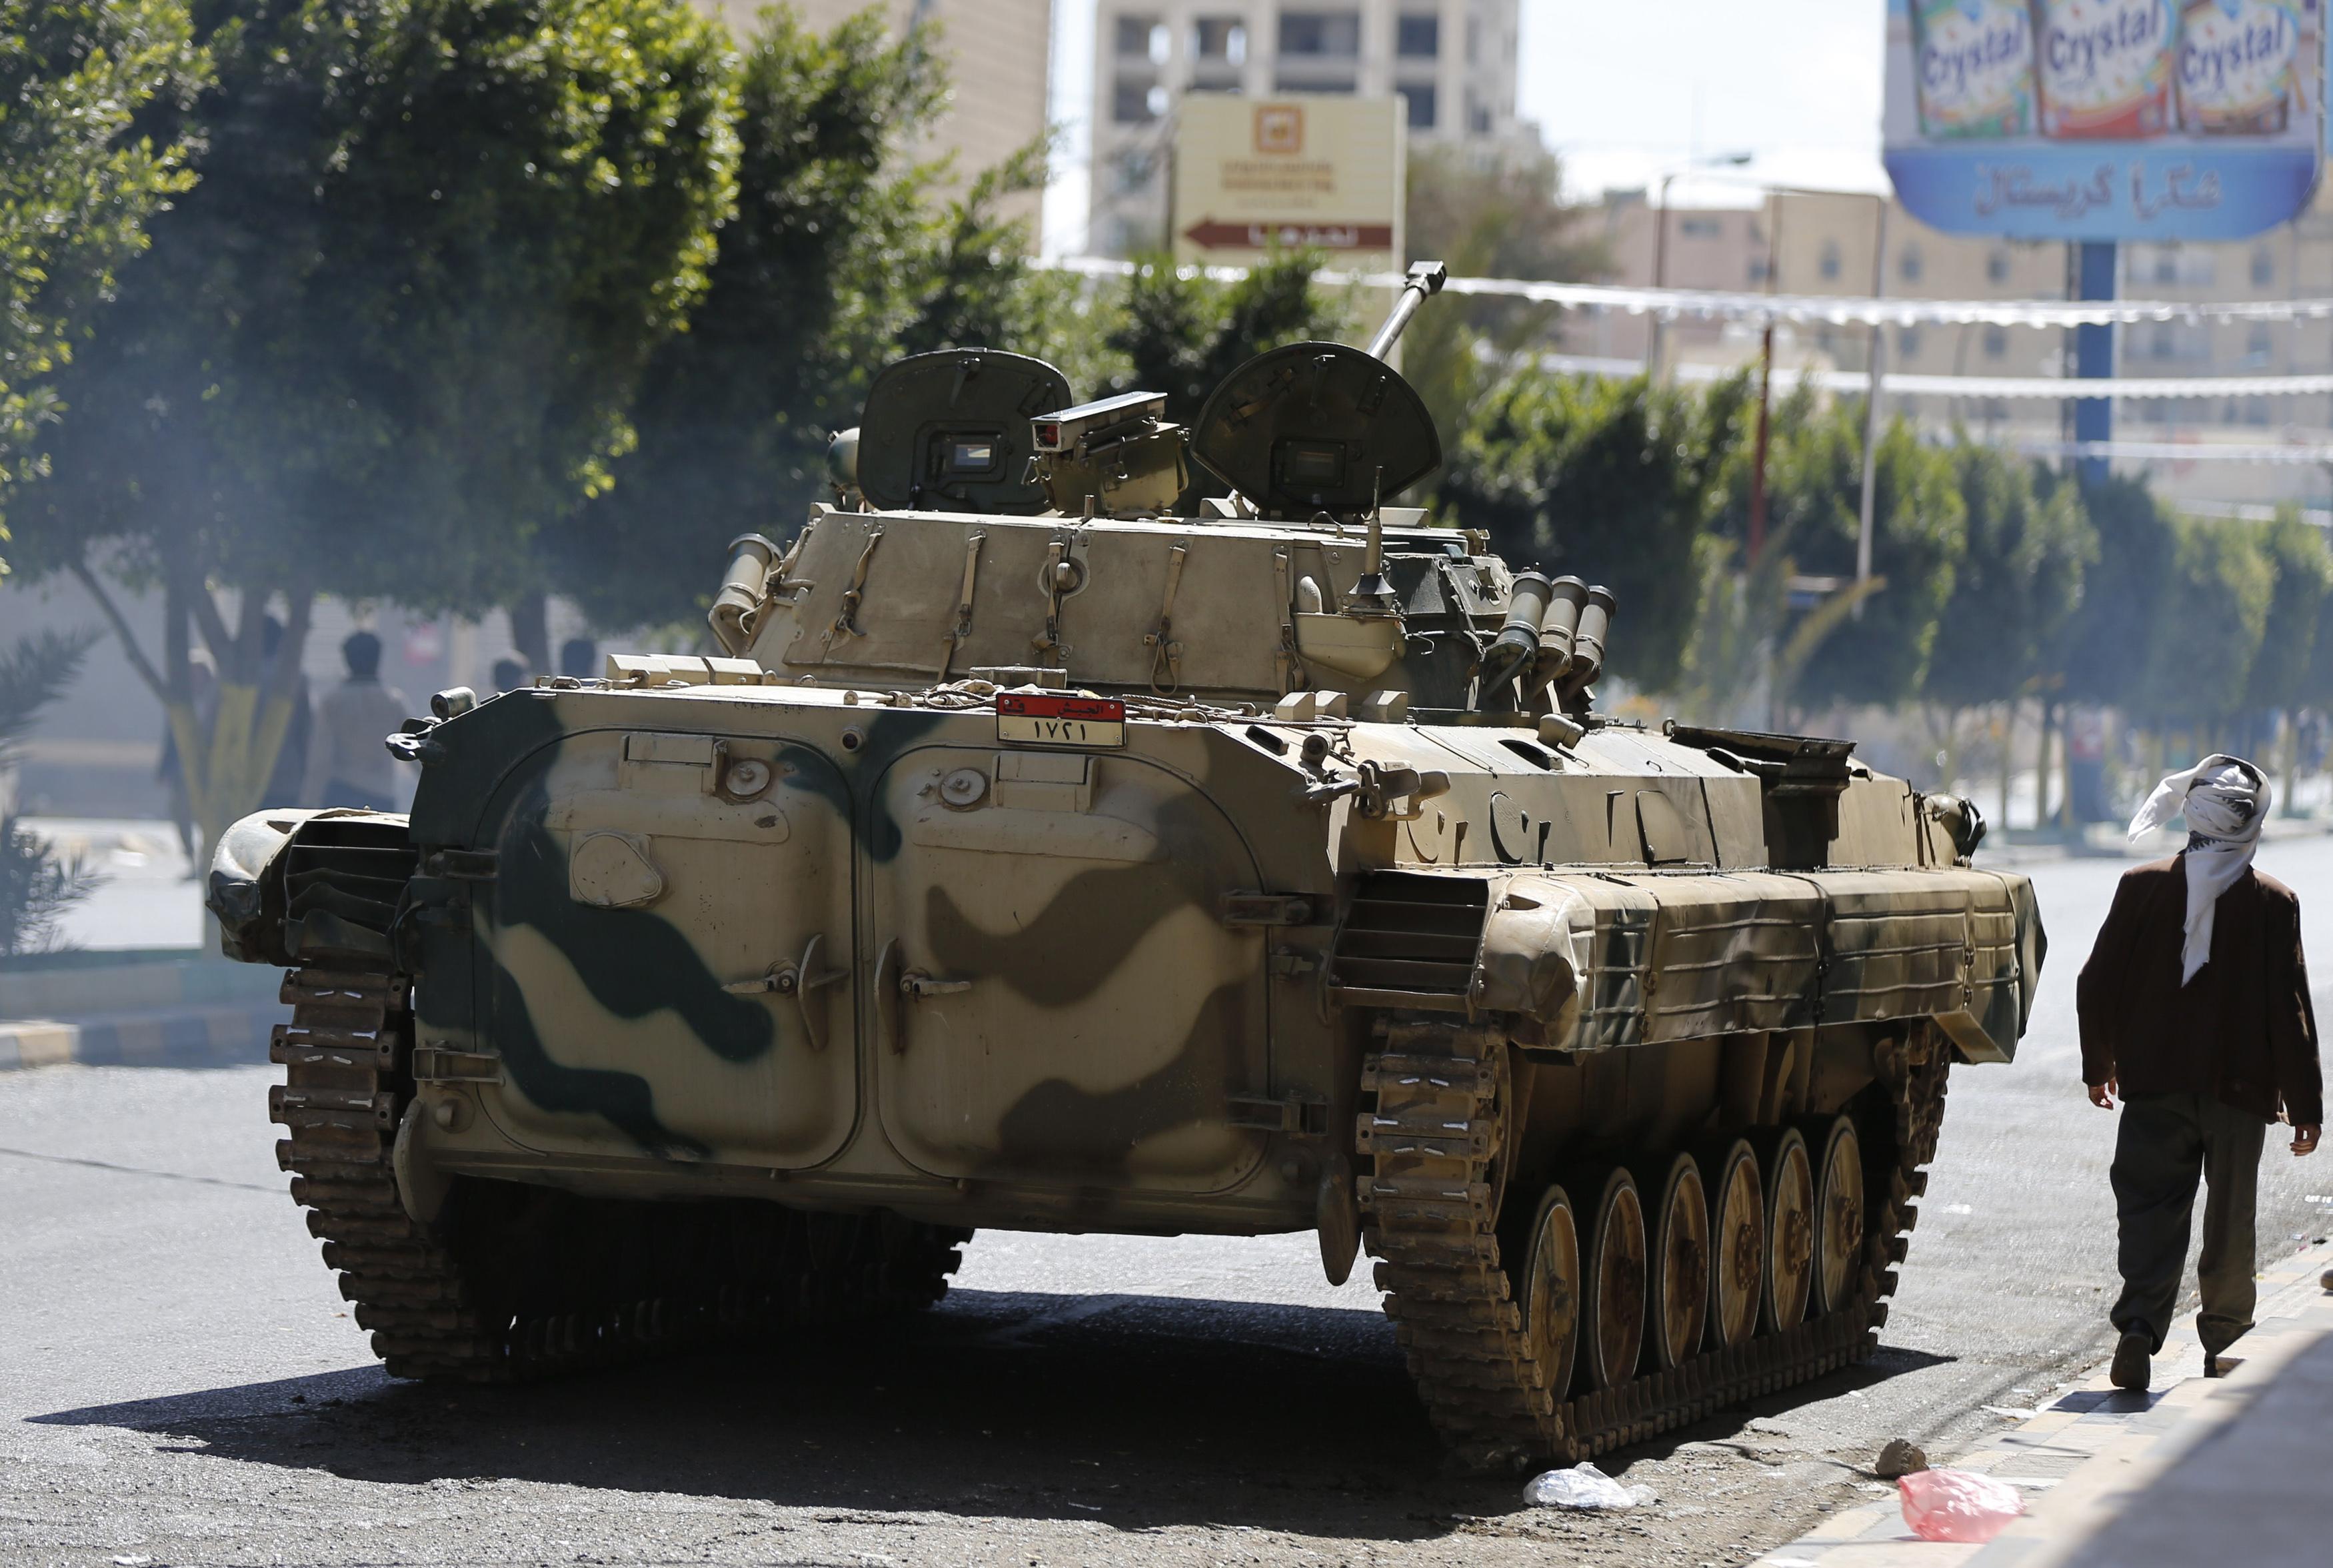 Egyptian embassy in Yemen resumes operations – ambassador 